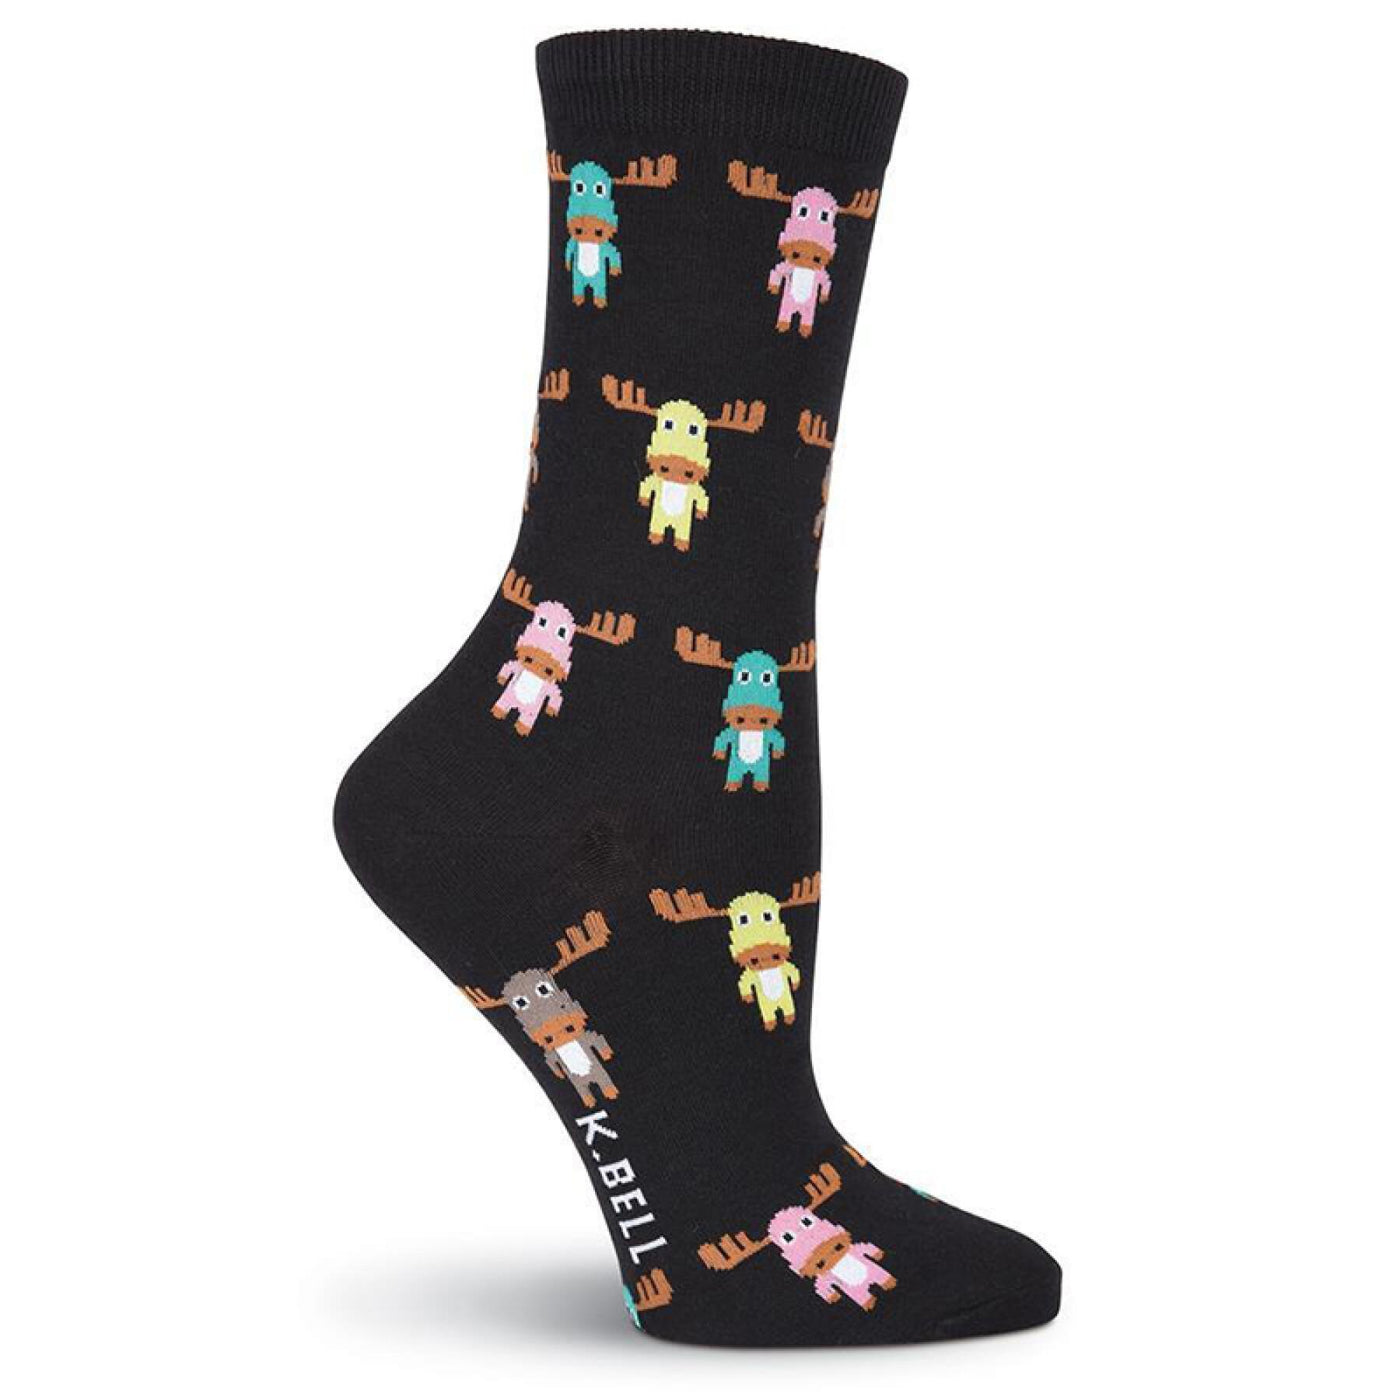 "Cute Moose" Crew Socks by K Bell - Medium